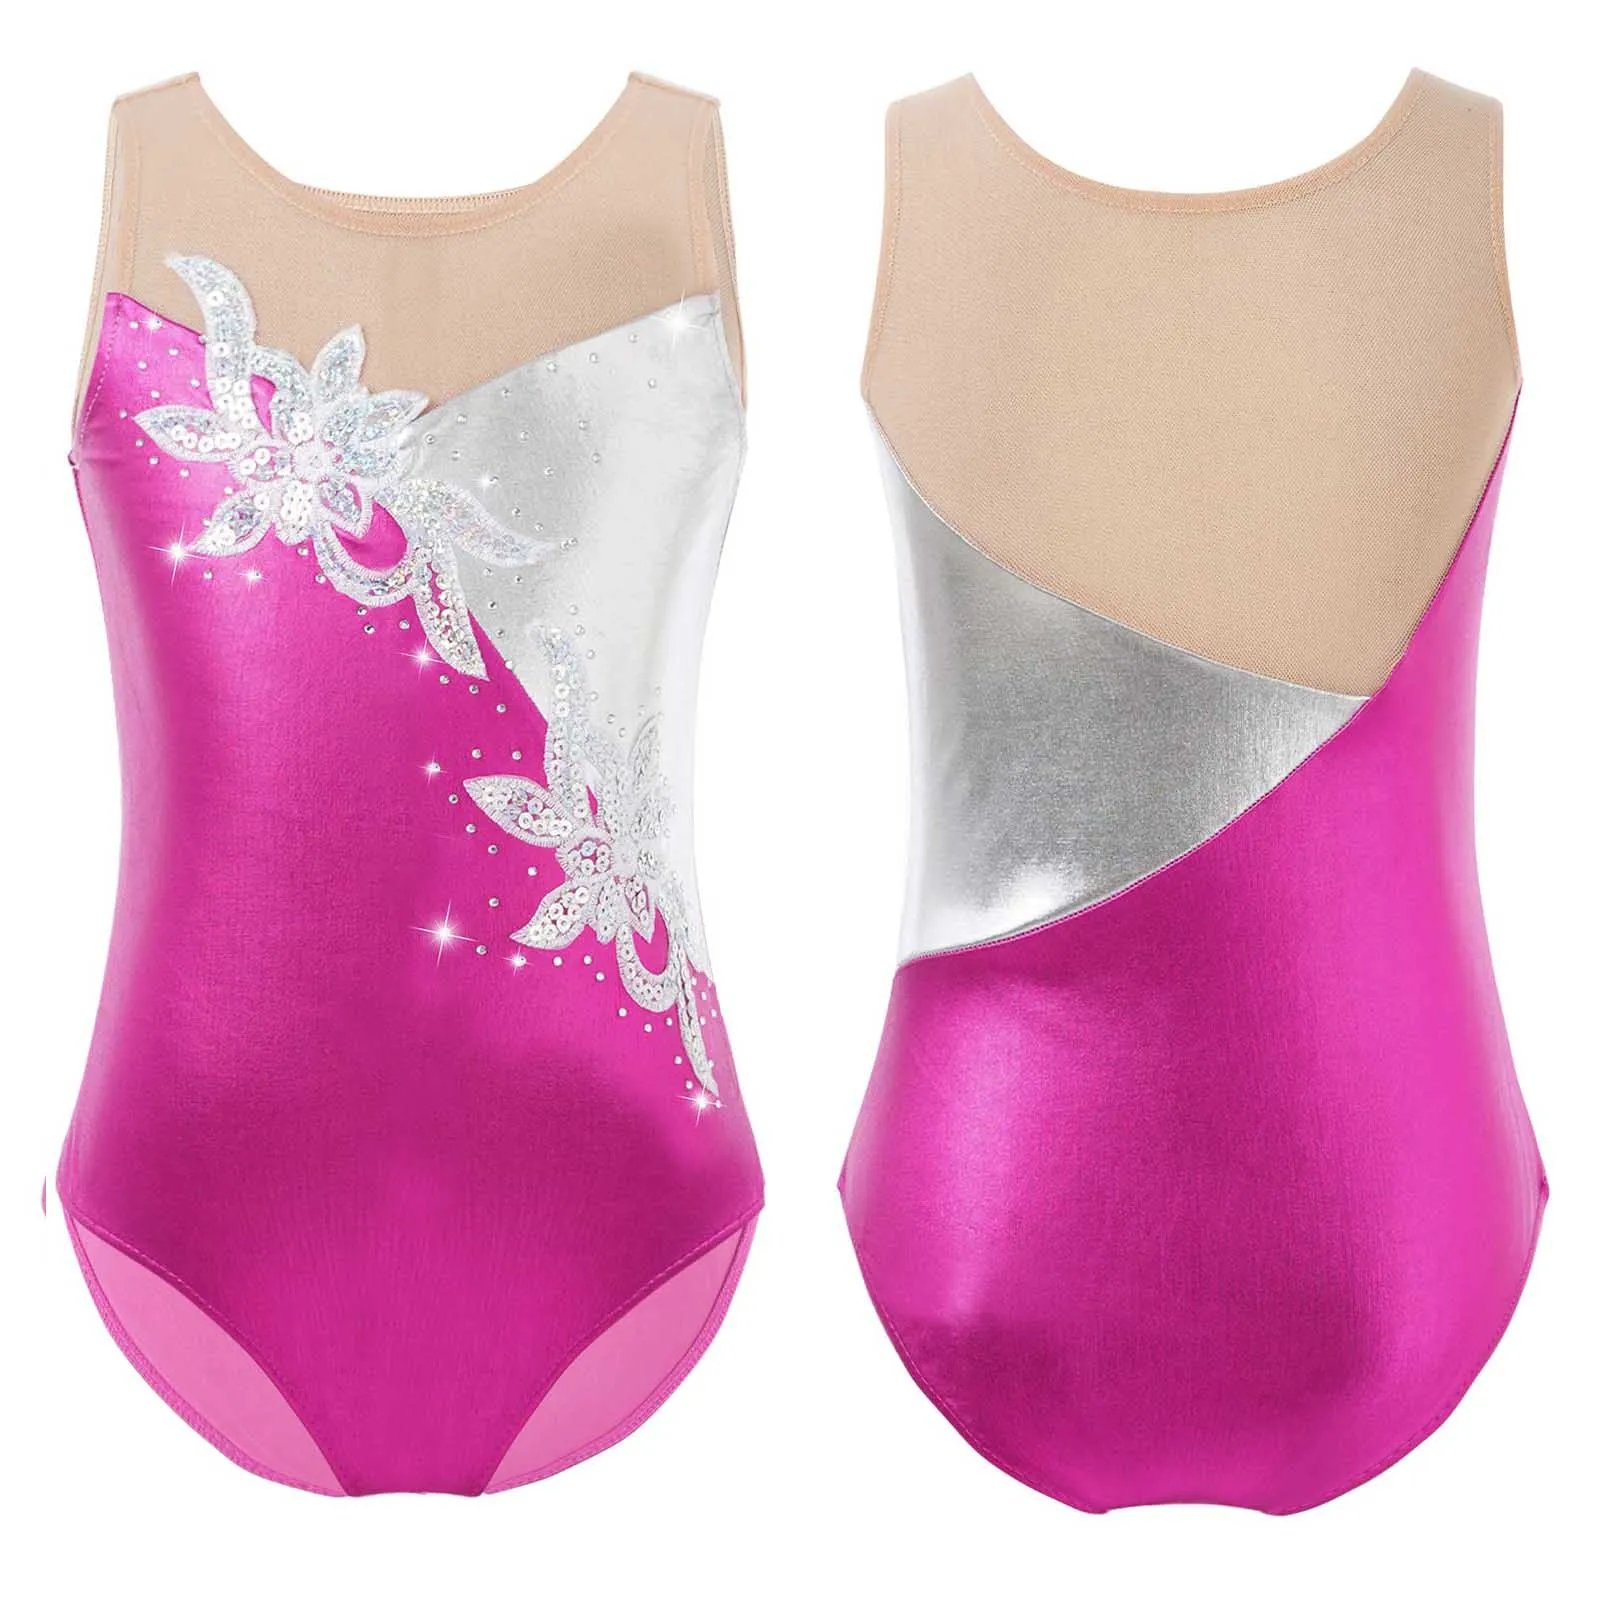 Leotards for Girls Gymnastics Ballet Dance Hot Pink Rainbow Stripes Ethnic Navy 